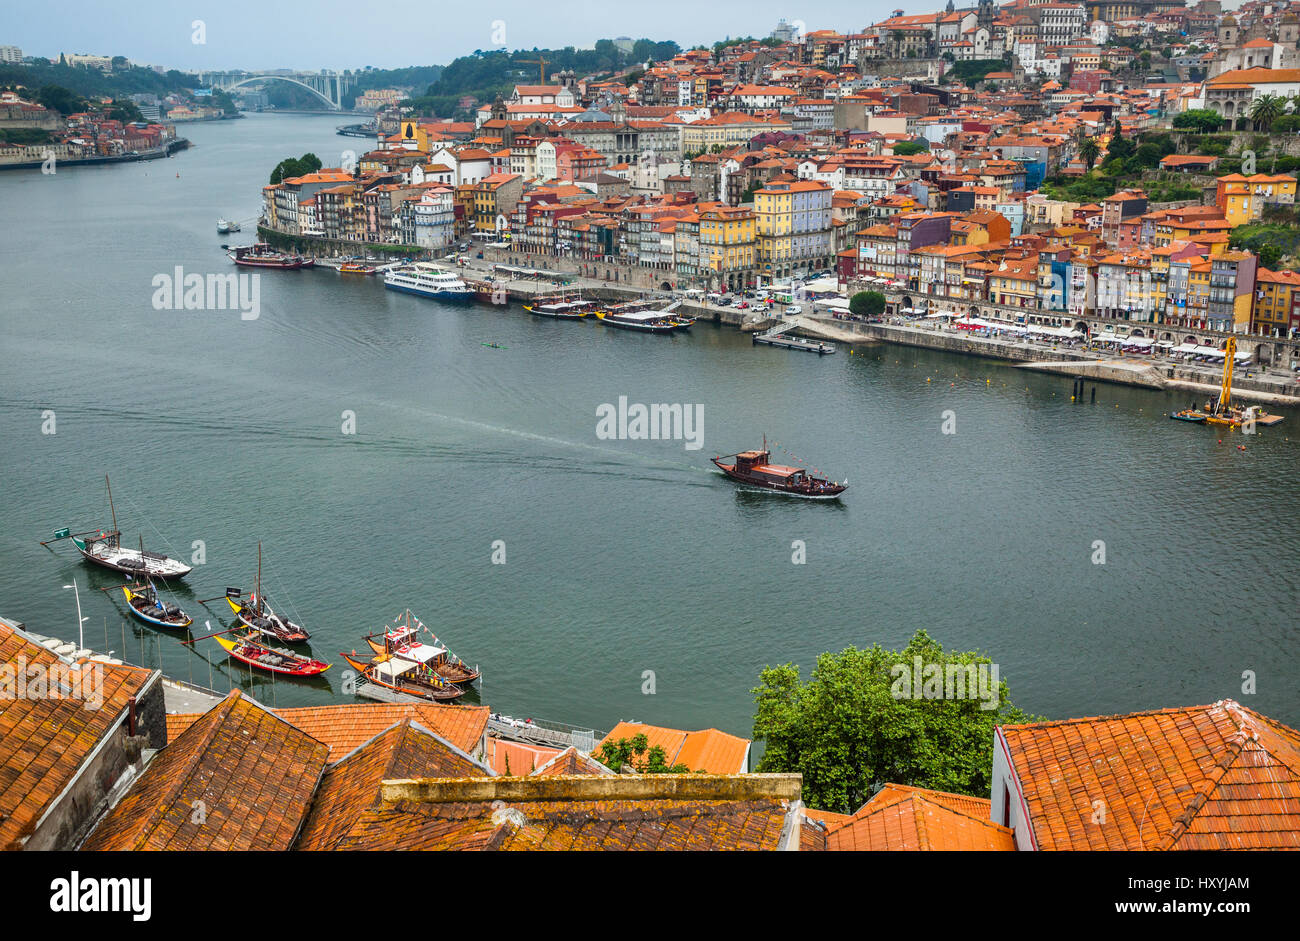 Portugal, Region Norte, Porto, view across Douro River from Vila Nova de Gaia to the historical center of Porto Stock Photo